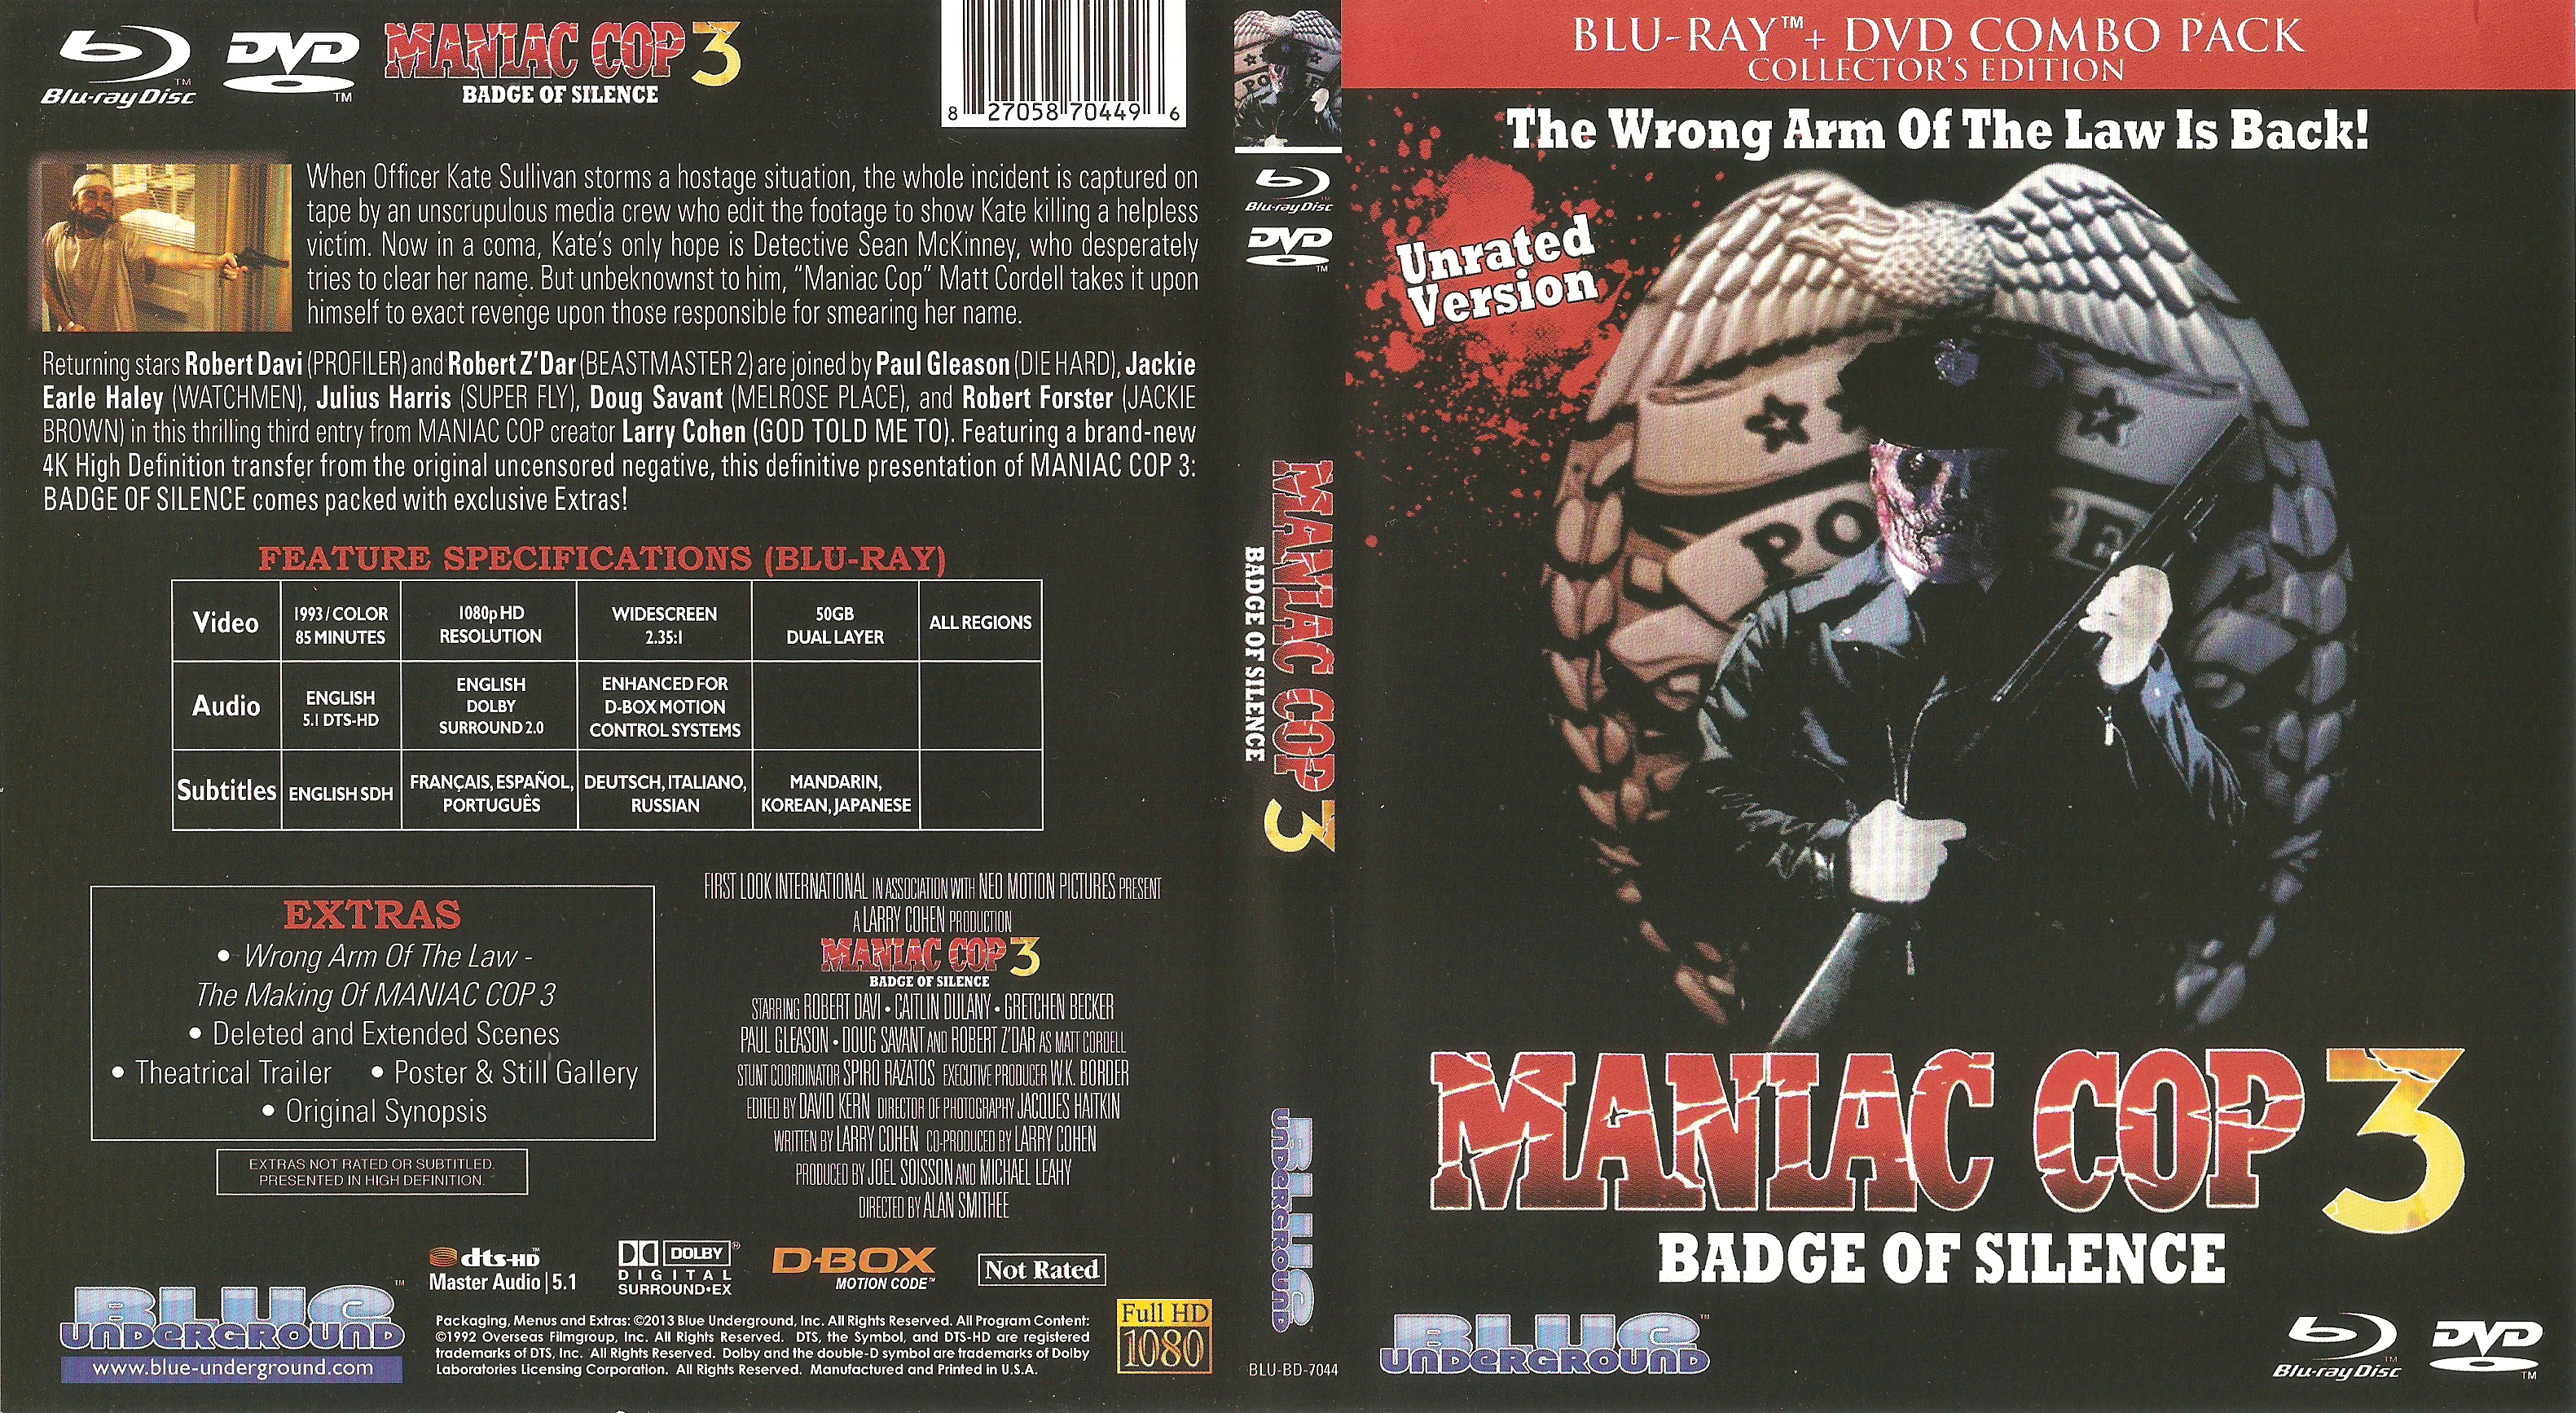 Jaquette DVD Maniac cop 3 Zone 1 (BLU-RAY)